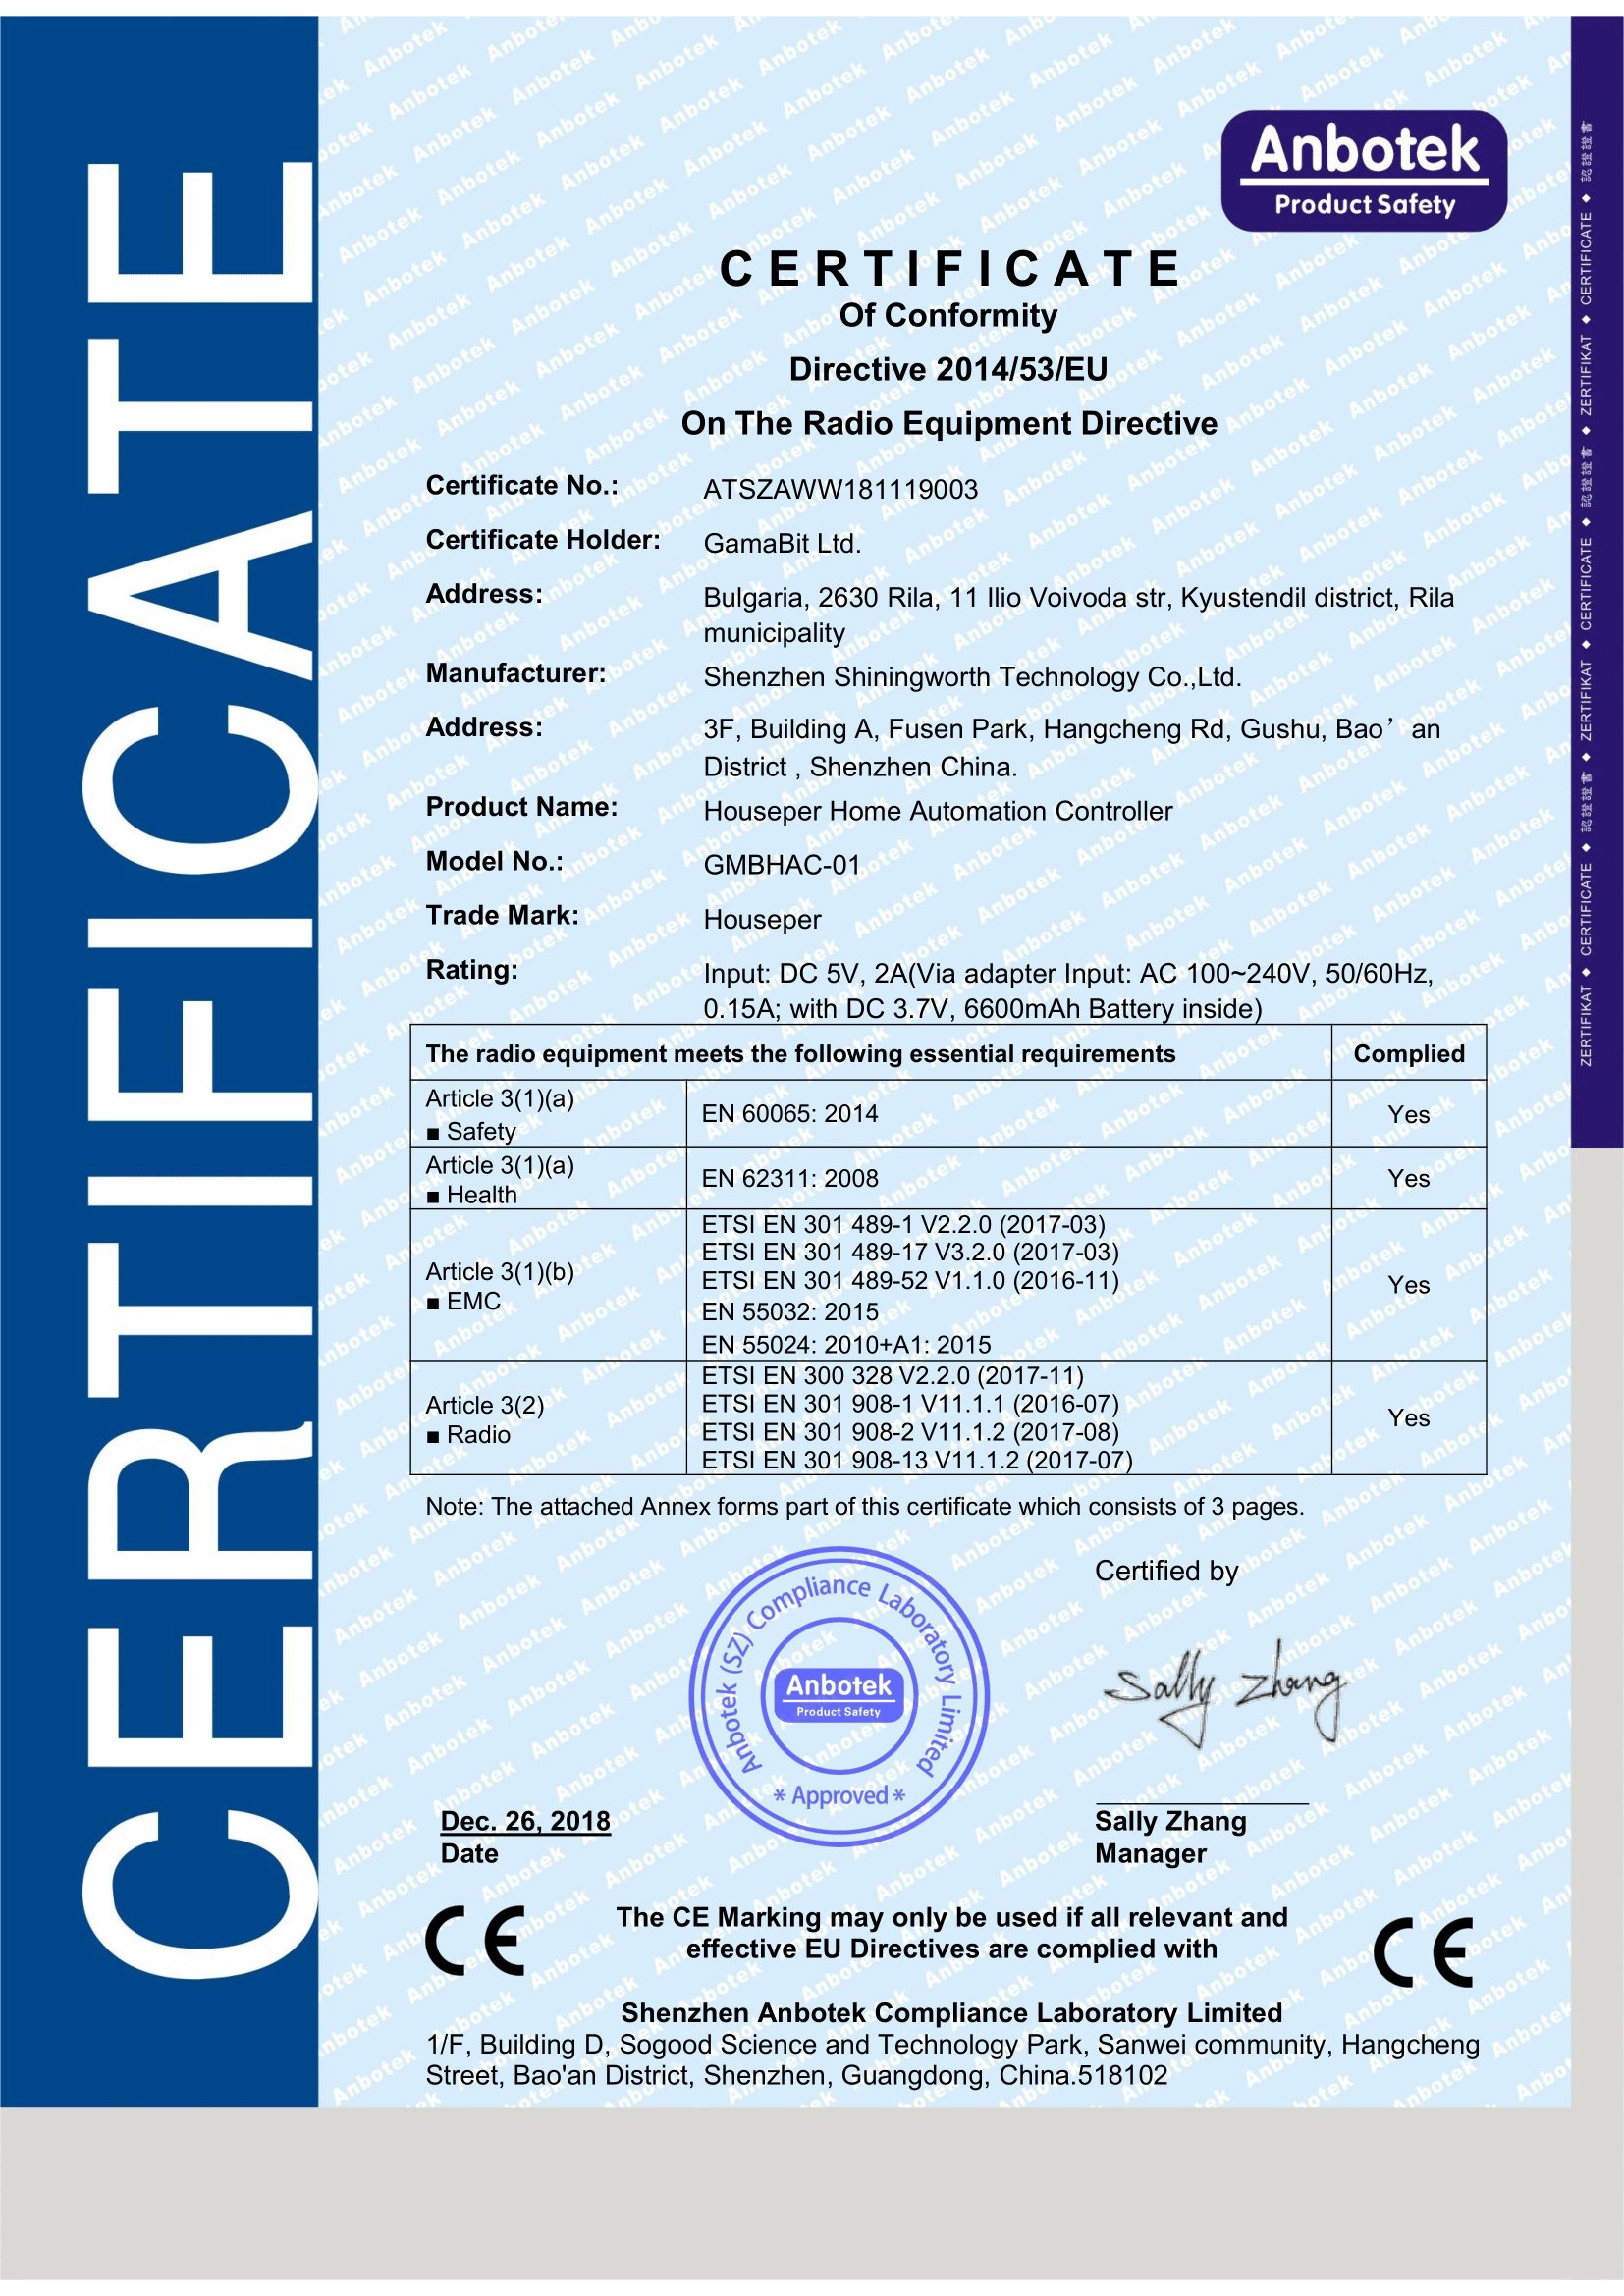 Houseper CE certificate